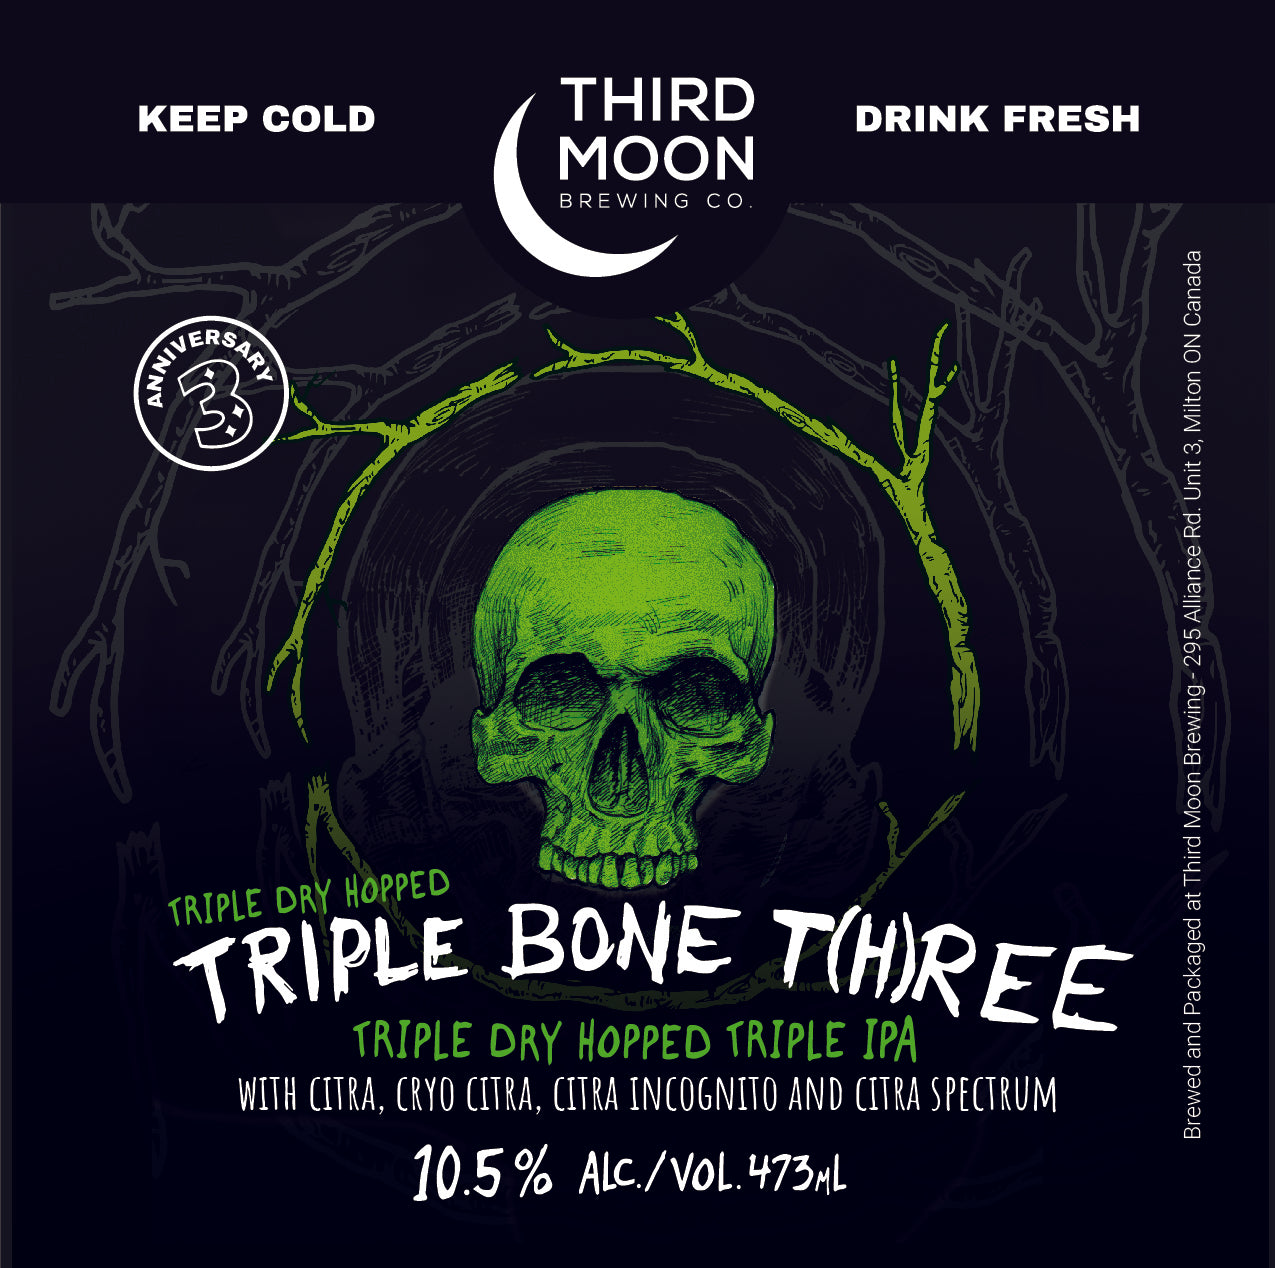 Triple IPA - 4-pk of "Triple Dry Hopped Triple Bone T(h)ree" tall cans